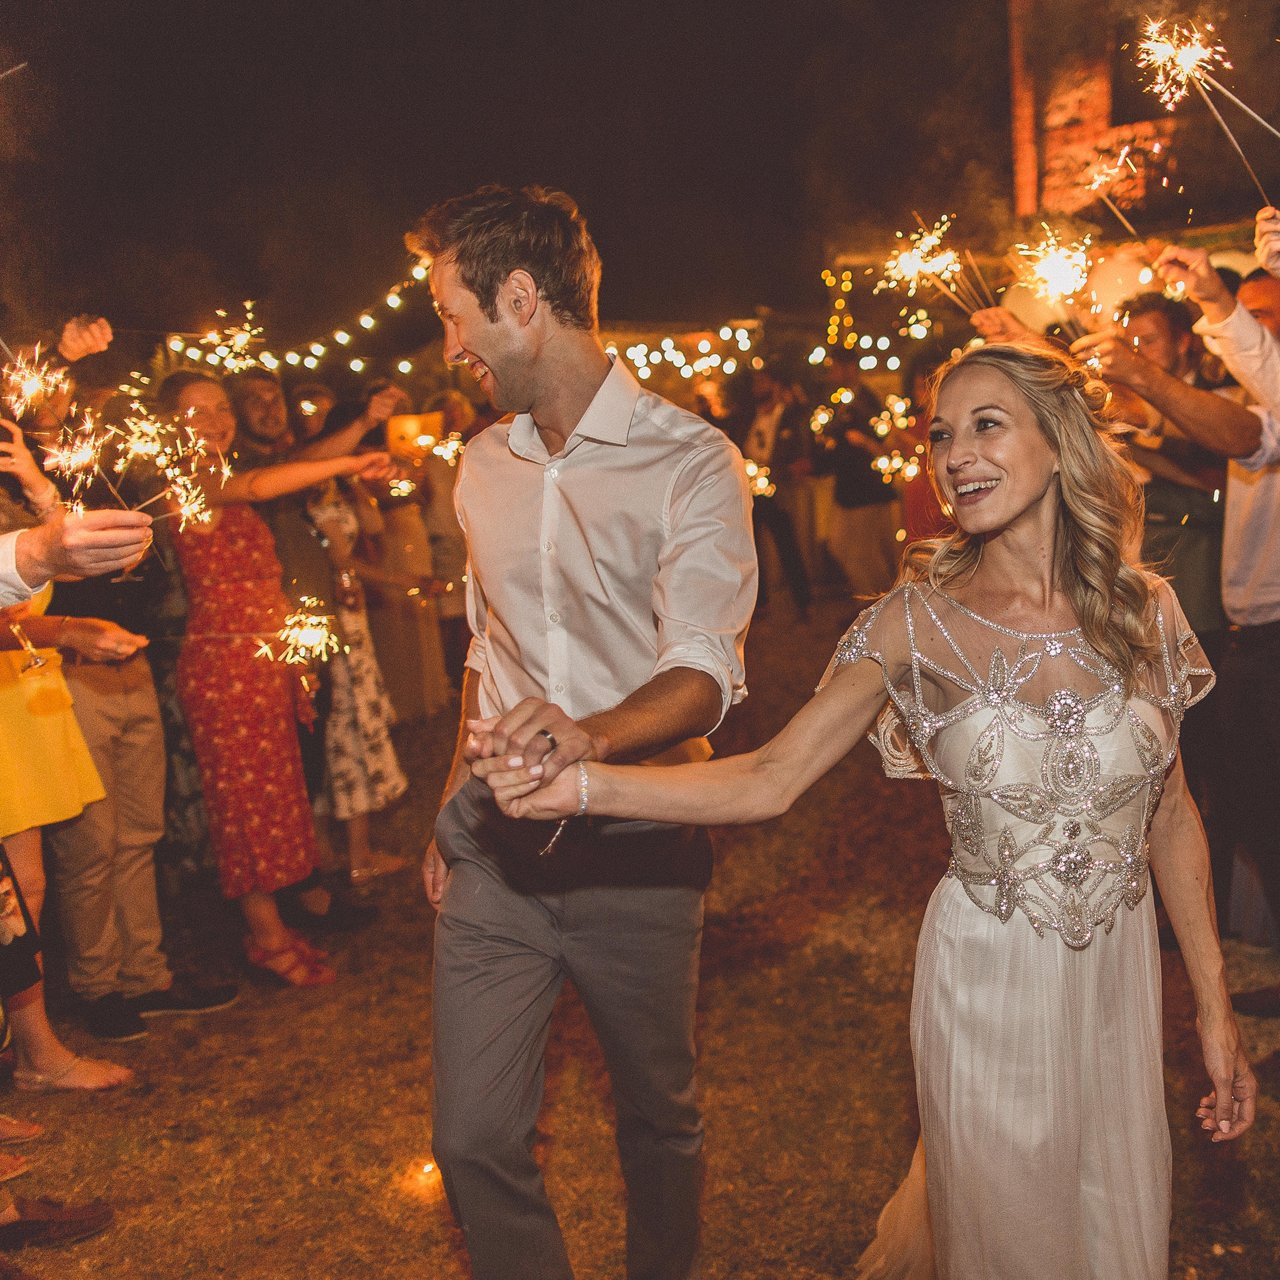 Giant Sparklers For Wedding
 Wedding Sparklers & Giant Send f Sparklers